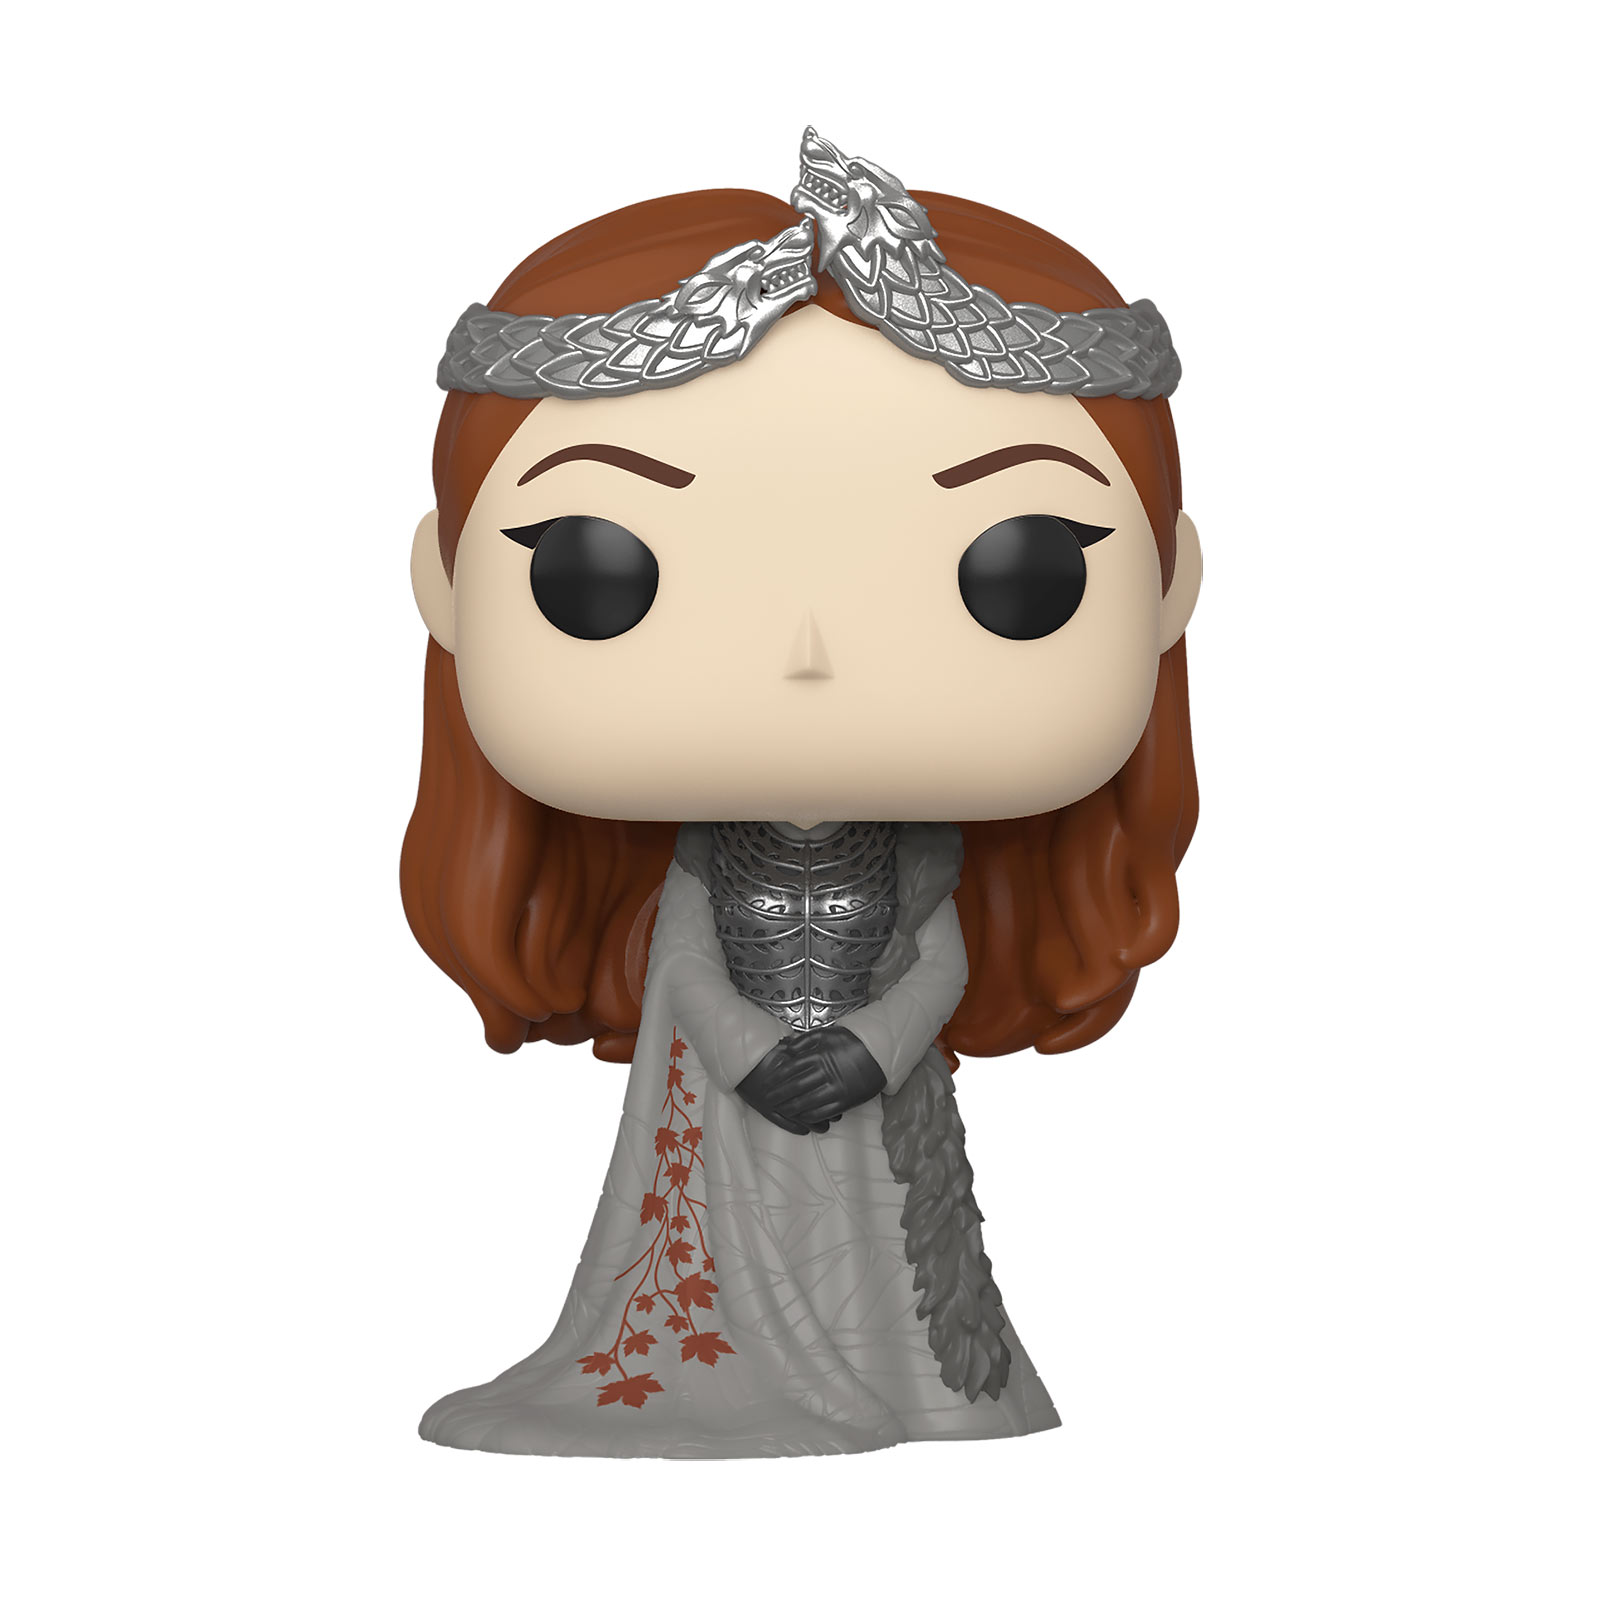 Game of Thrones - Sansa Stark Seizoen 8 Funko Pop Figurine